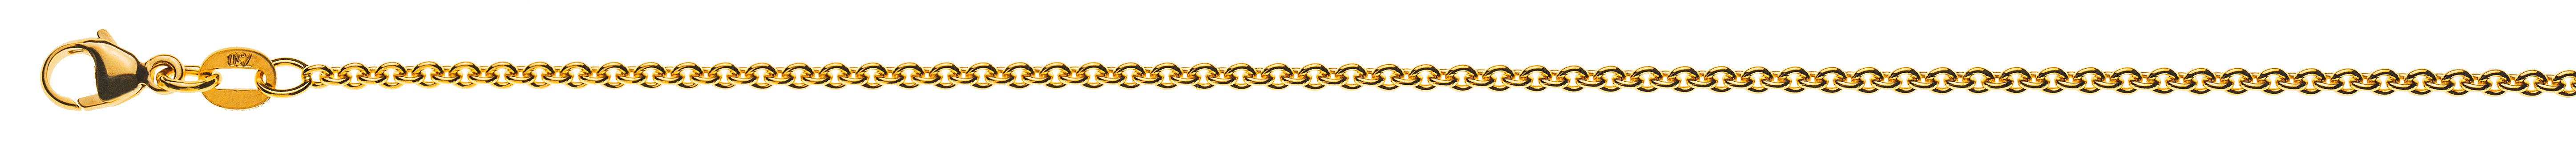 AURONOS Prestige Necklace Yellow Gold 18K Round Anchor 60cm 1.9mm